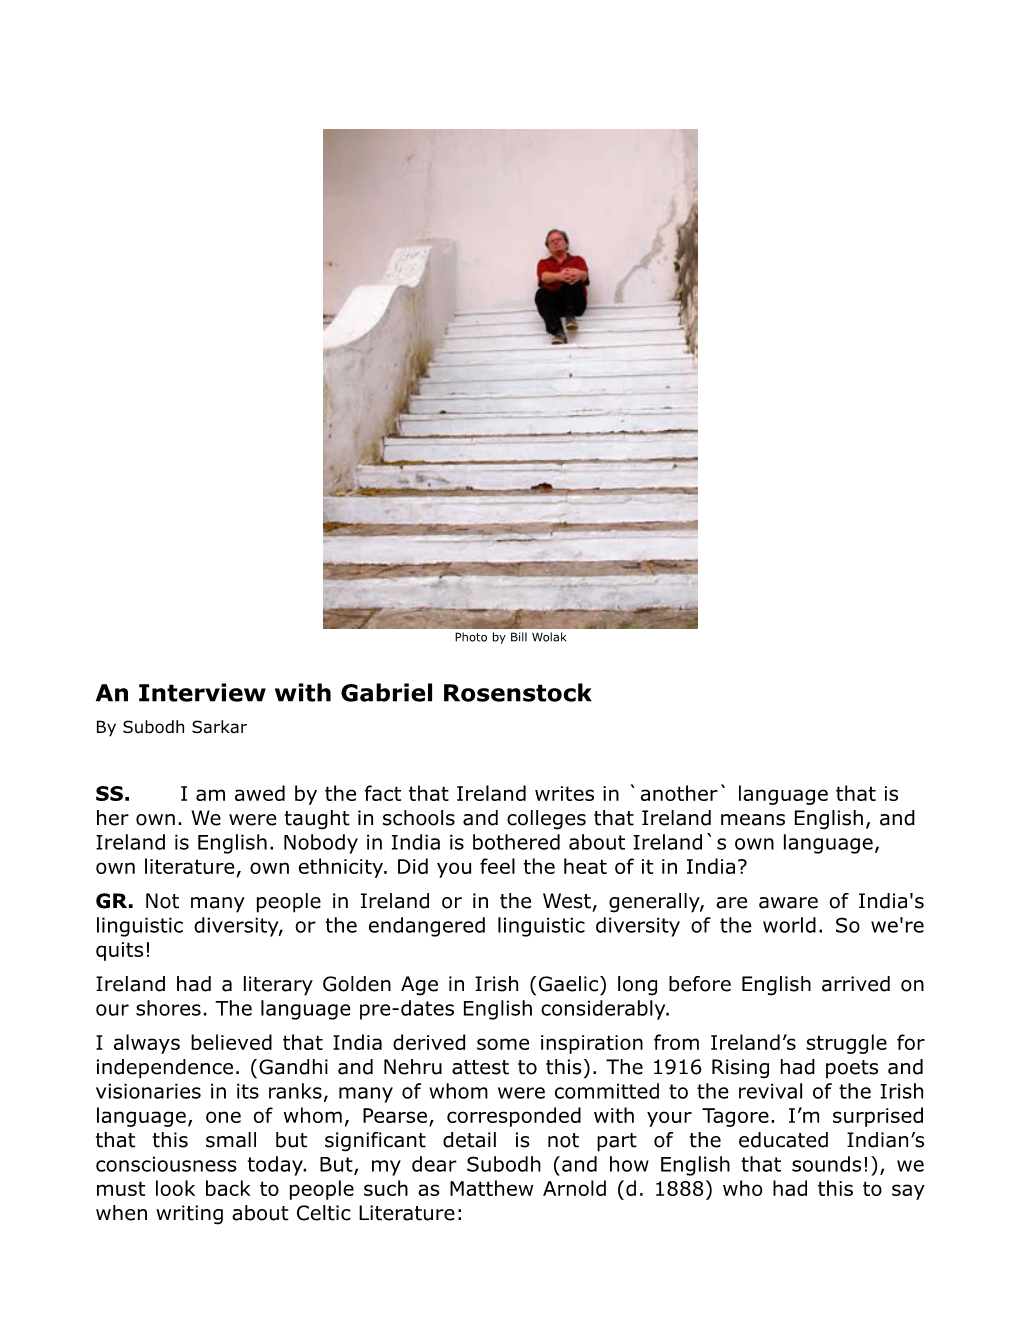 An Interview with Gabriel Rosenstock by Subodh Sarkar